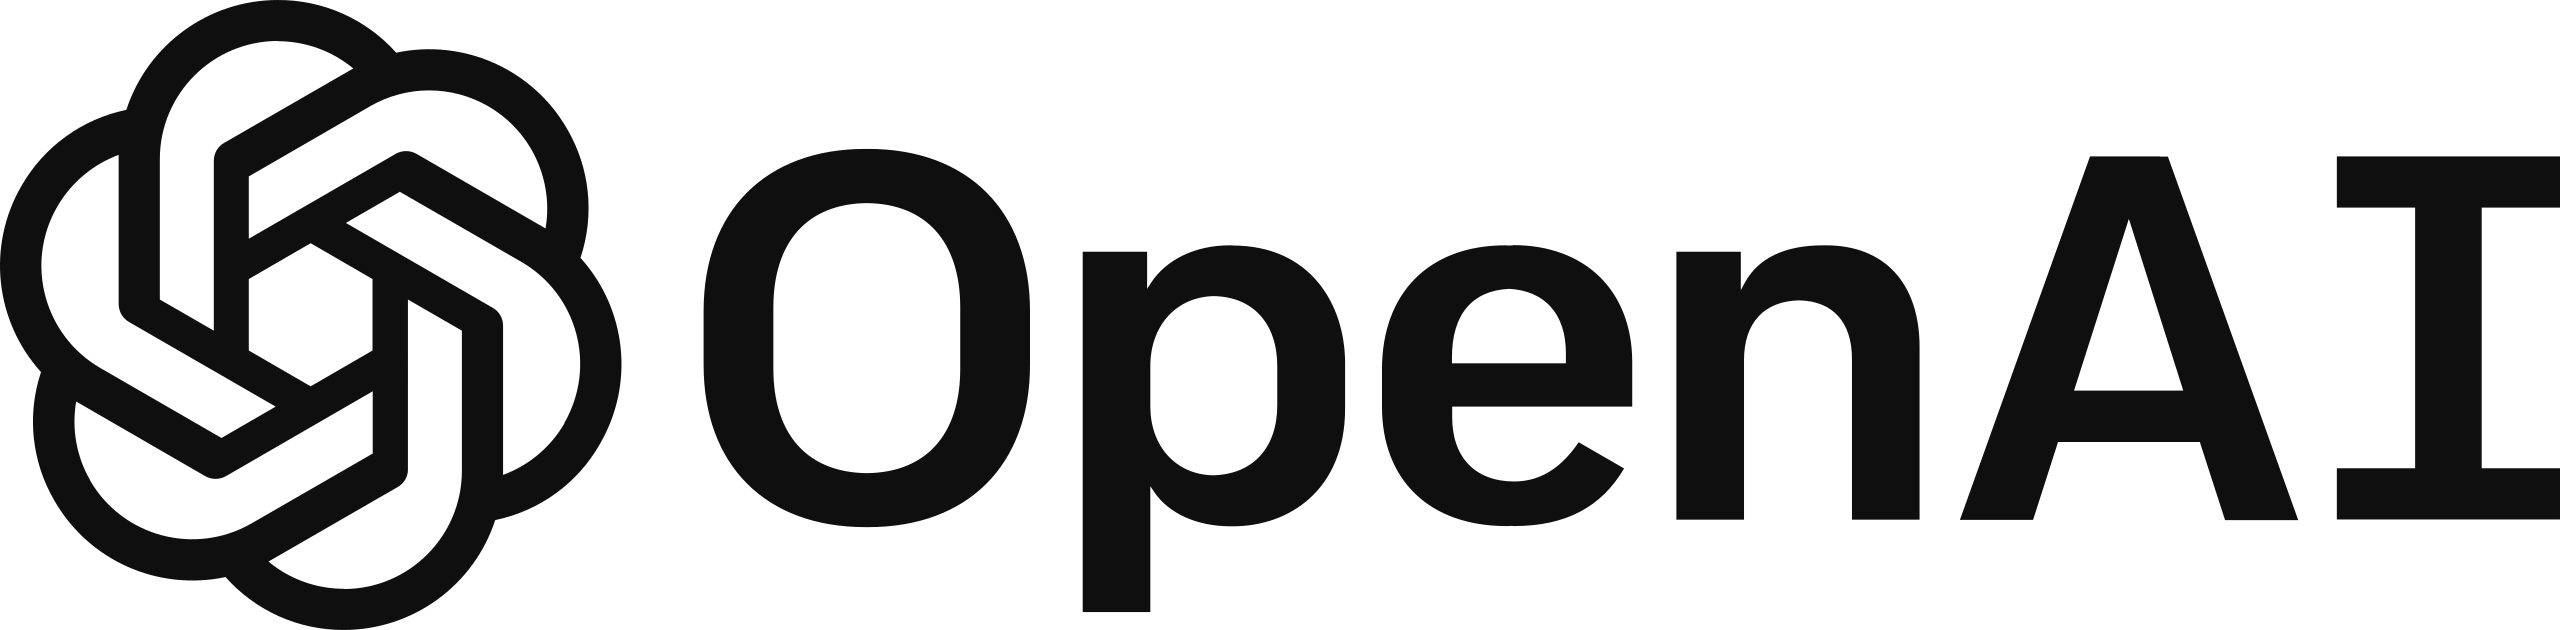 OpenAI GPT-3